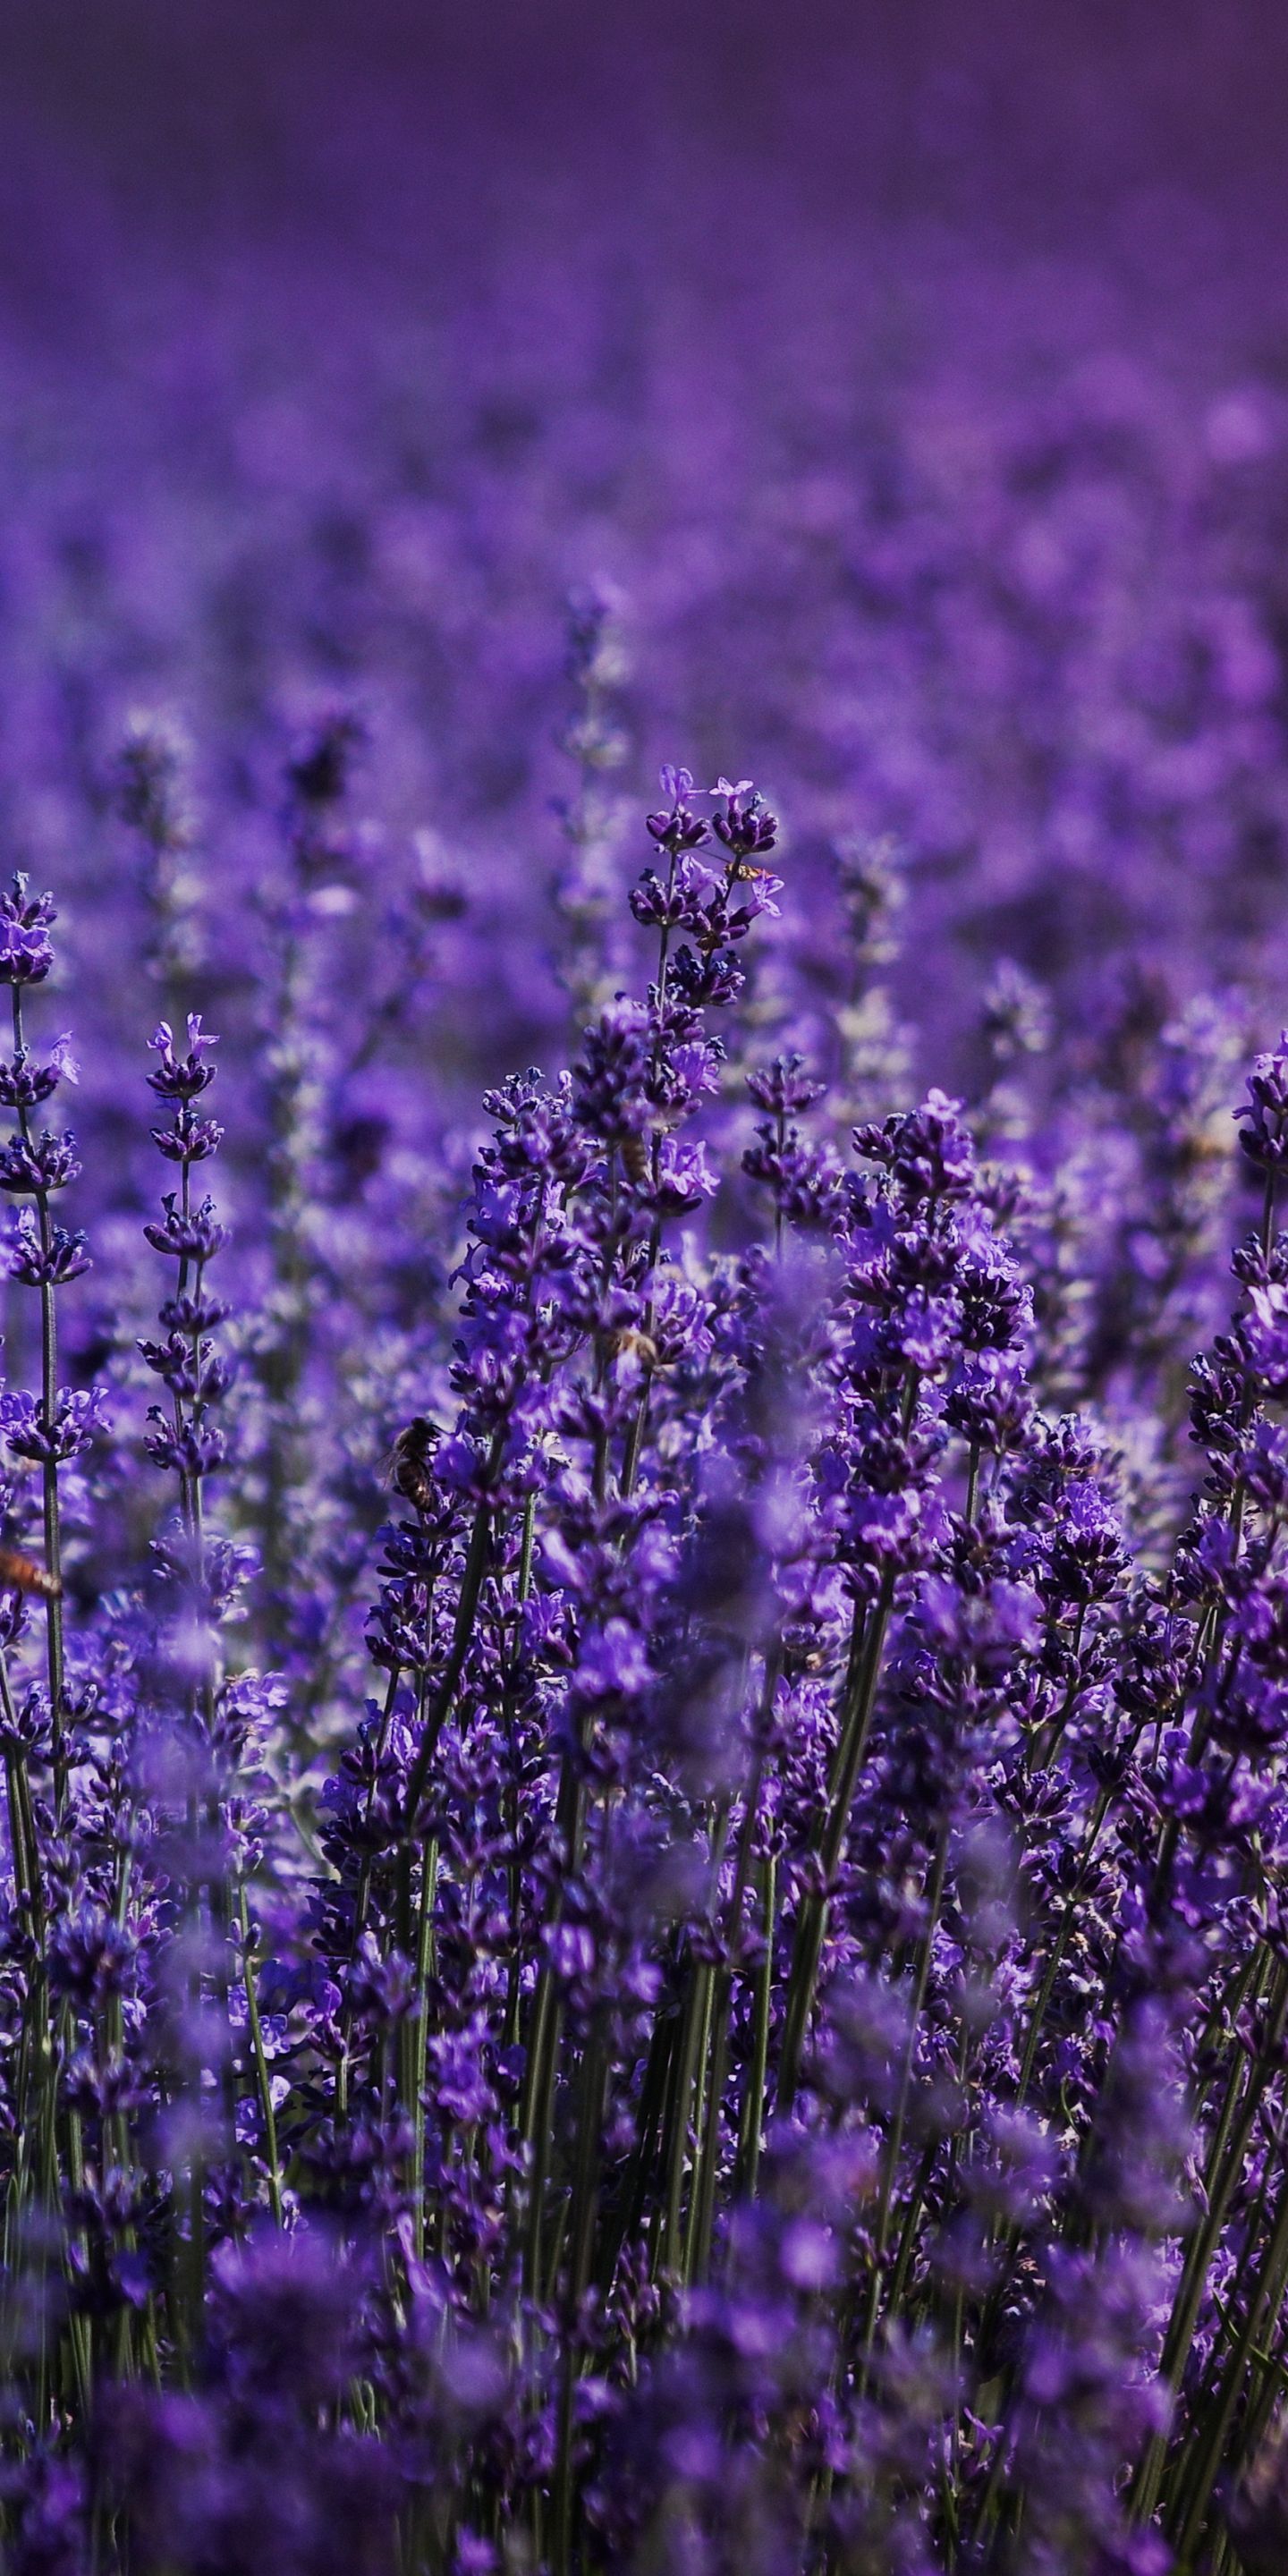 Download 1440x2880 wallpaper blossom, lavender field, flowers, lg v lg g 1440x2880 HD image, background, 21910